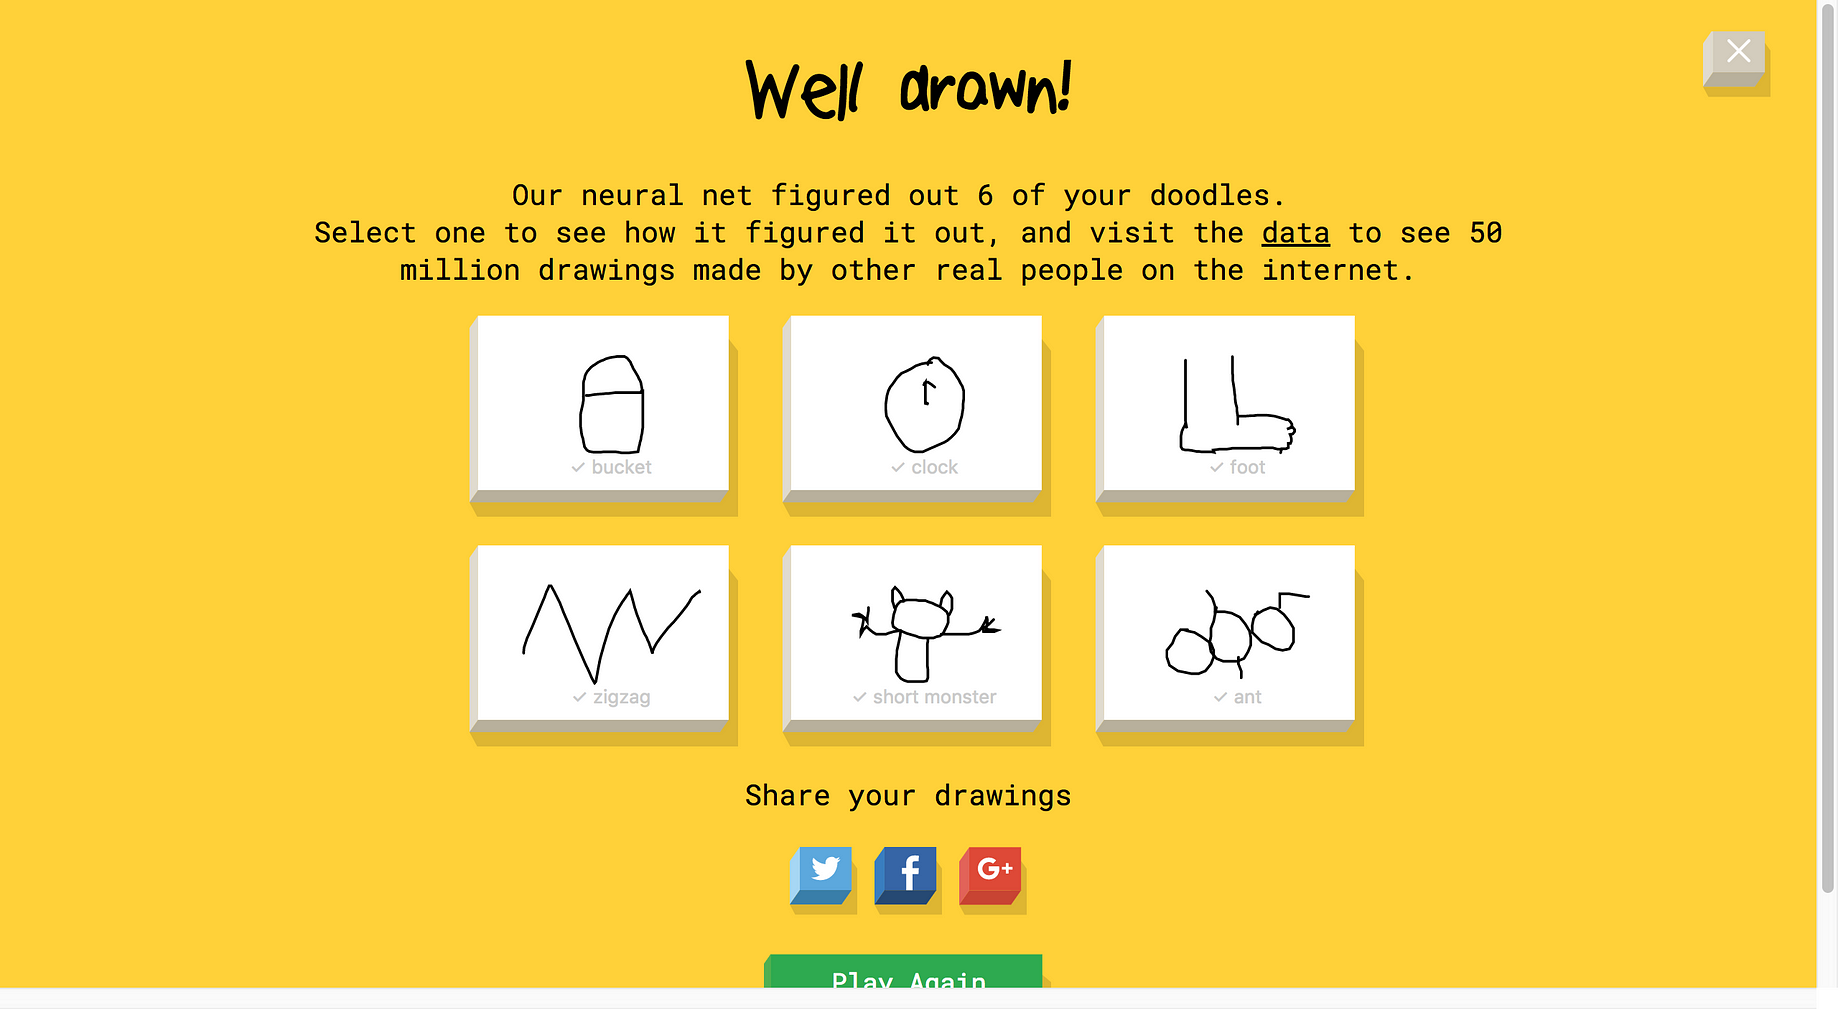 Touhou Udrydde Bevidstløs Quick, Draw! : Google's Fun A.I. Guessing Game | by Britt | Medium